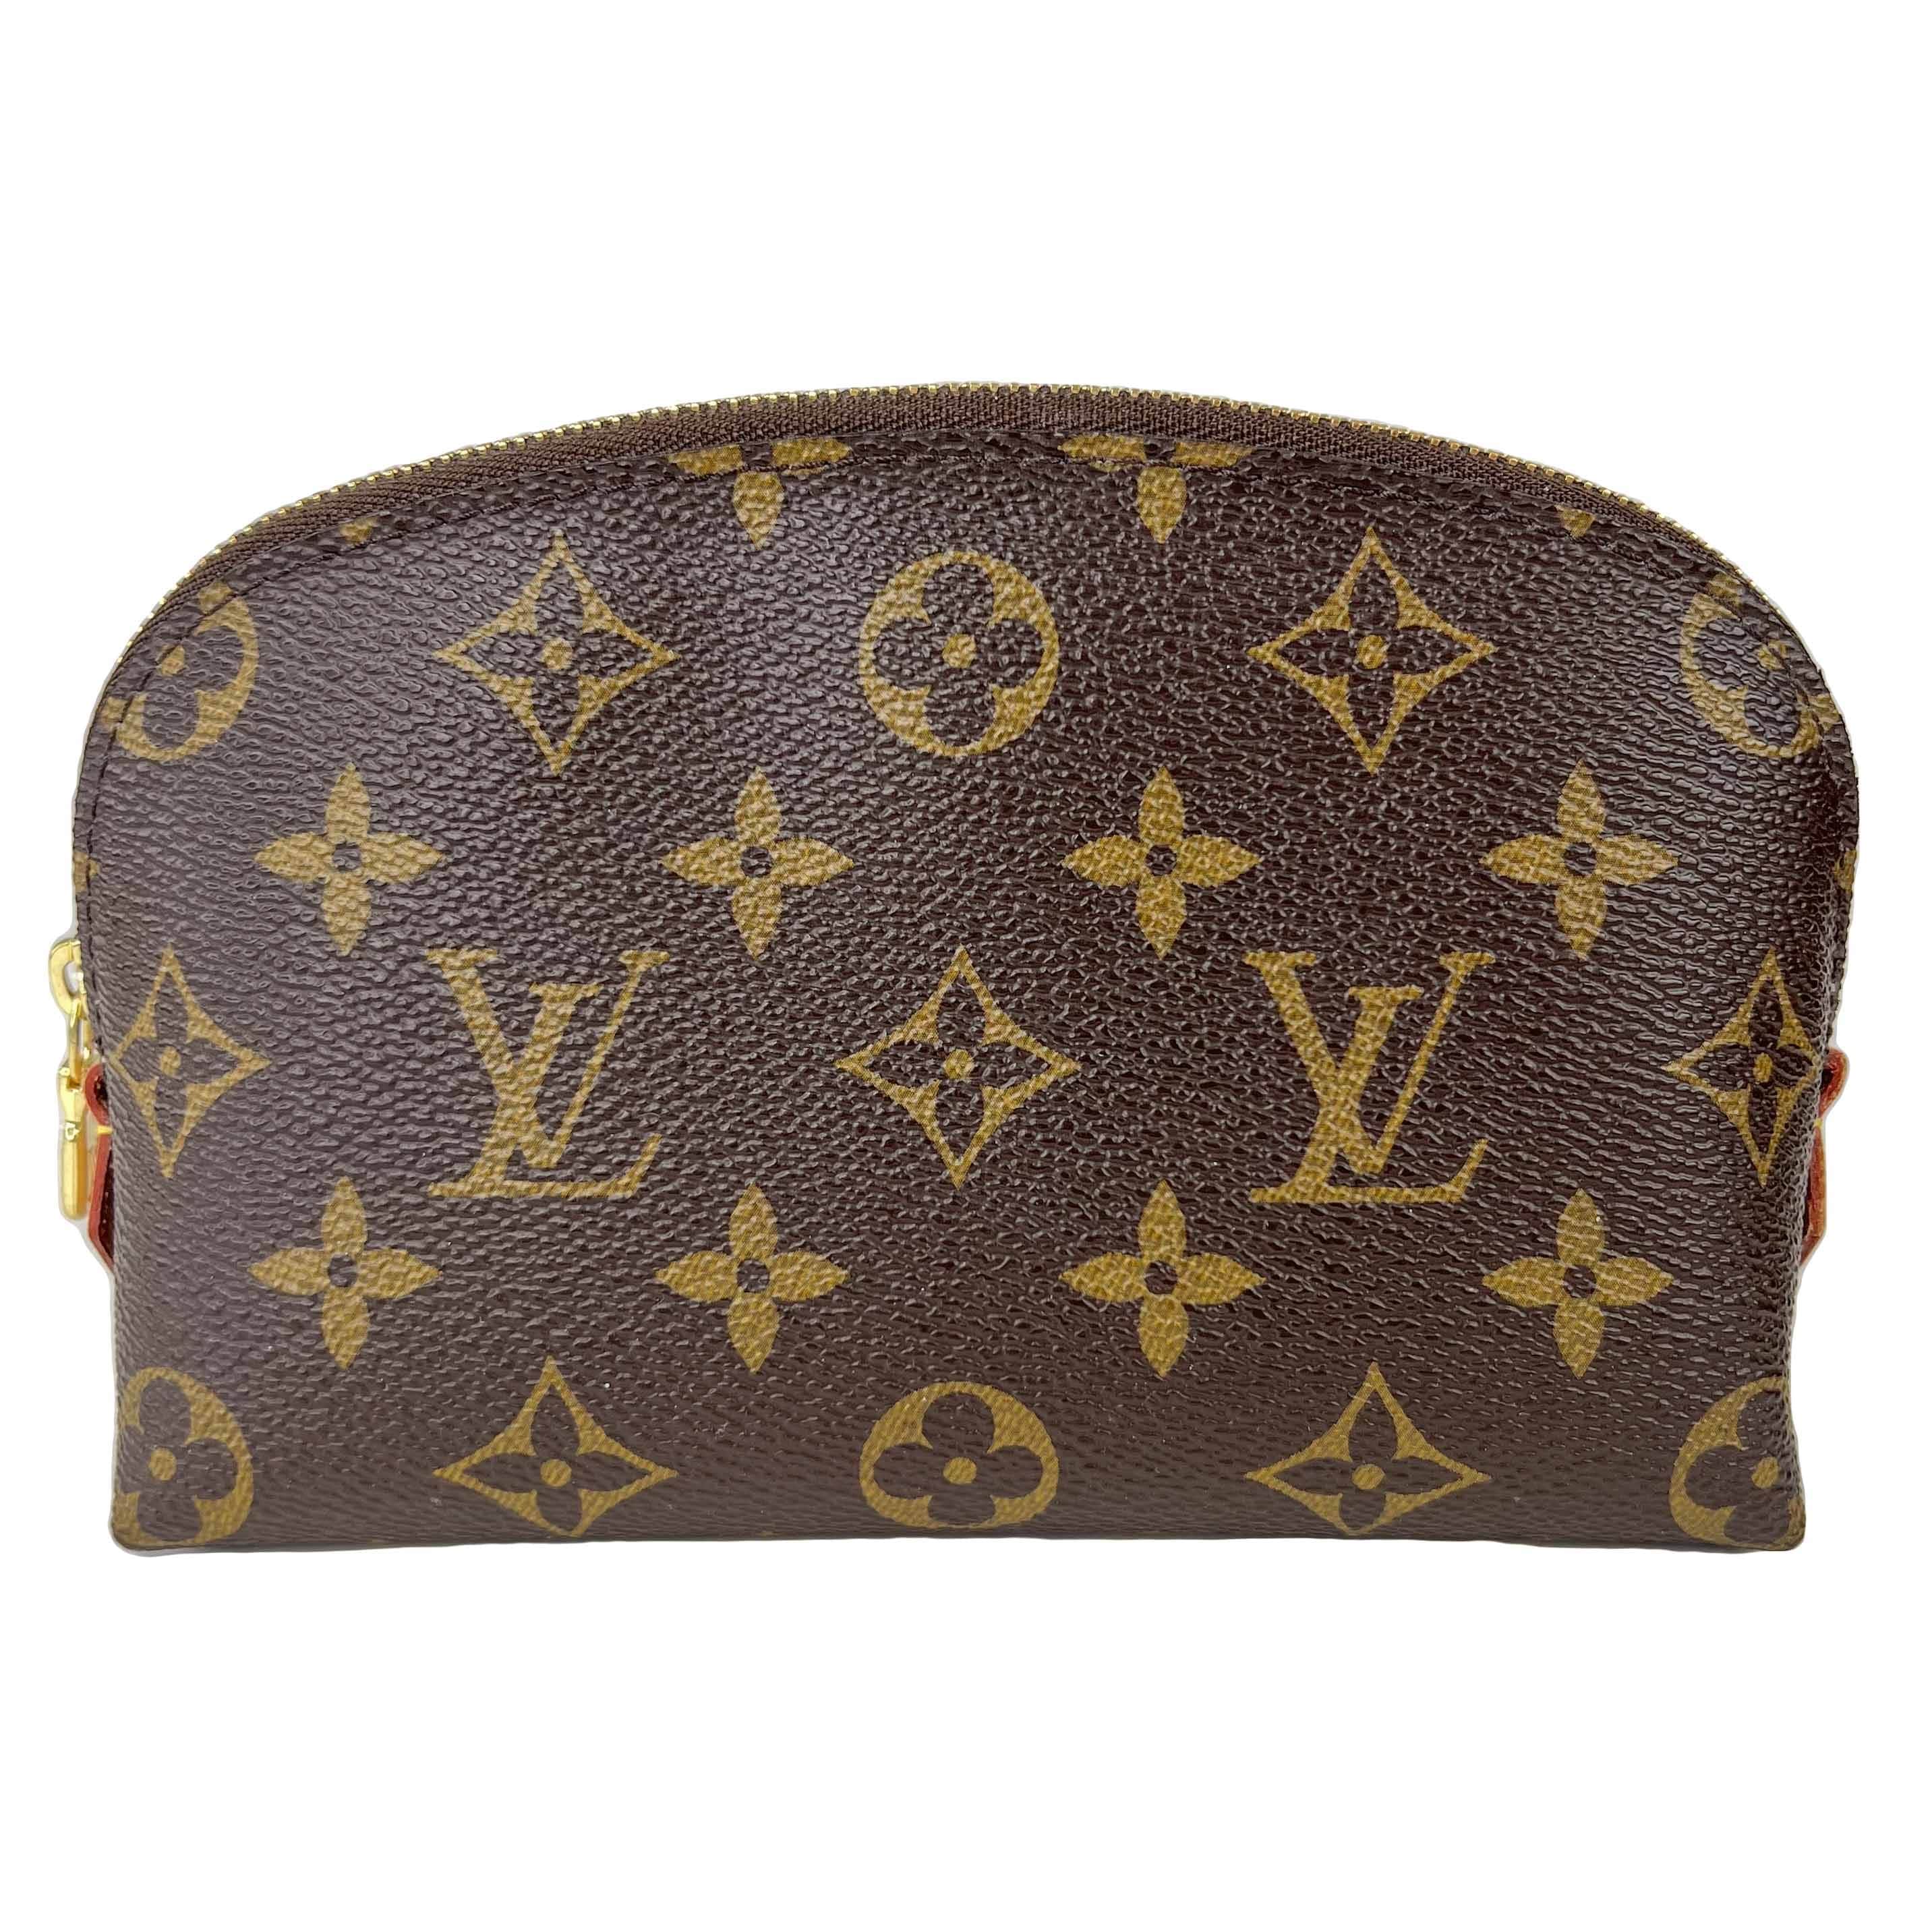 Louis Vuitton Damier Azur Cosmetic PM - Neutrals Cosmetic Bags